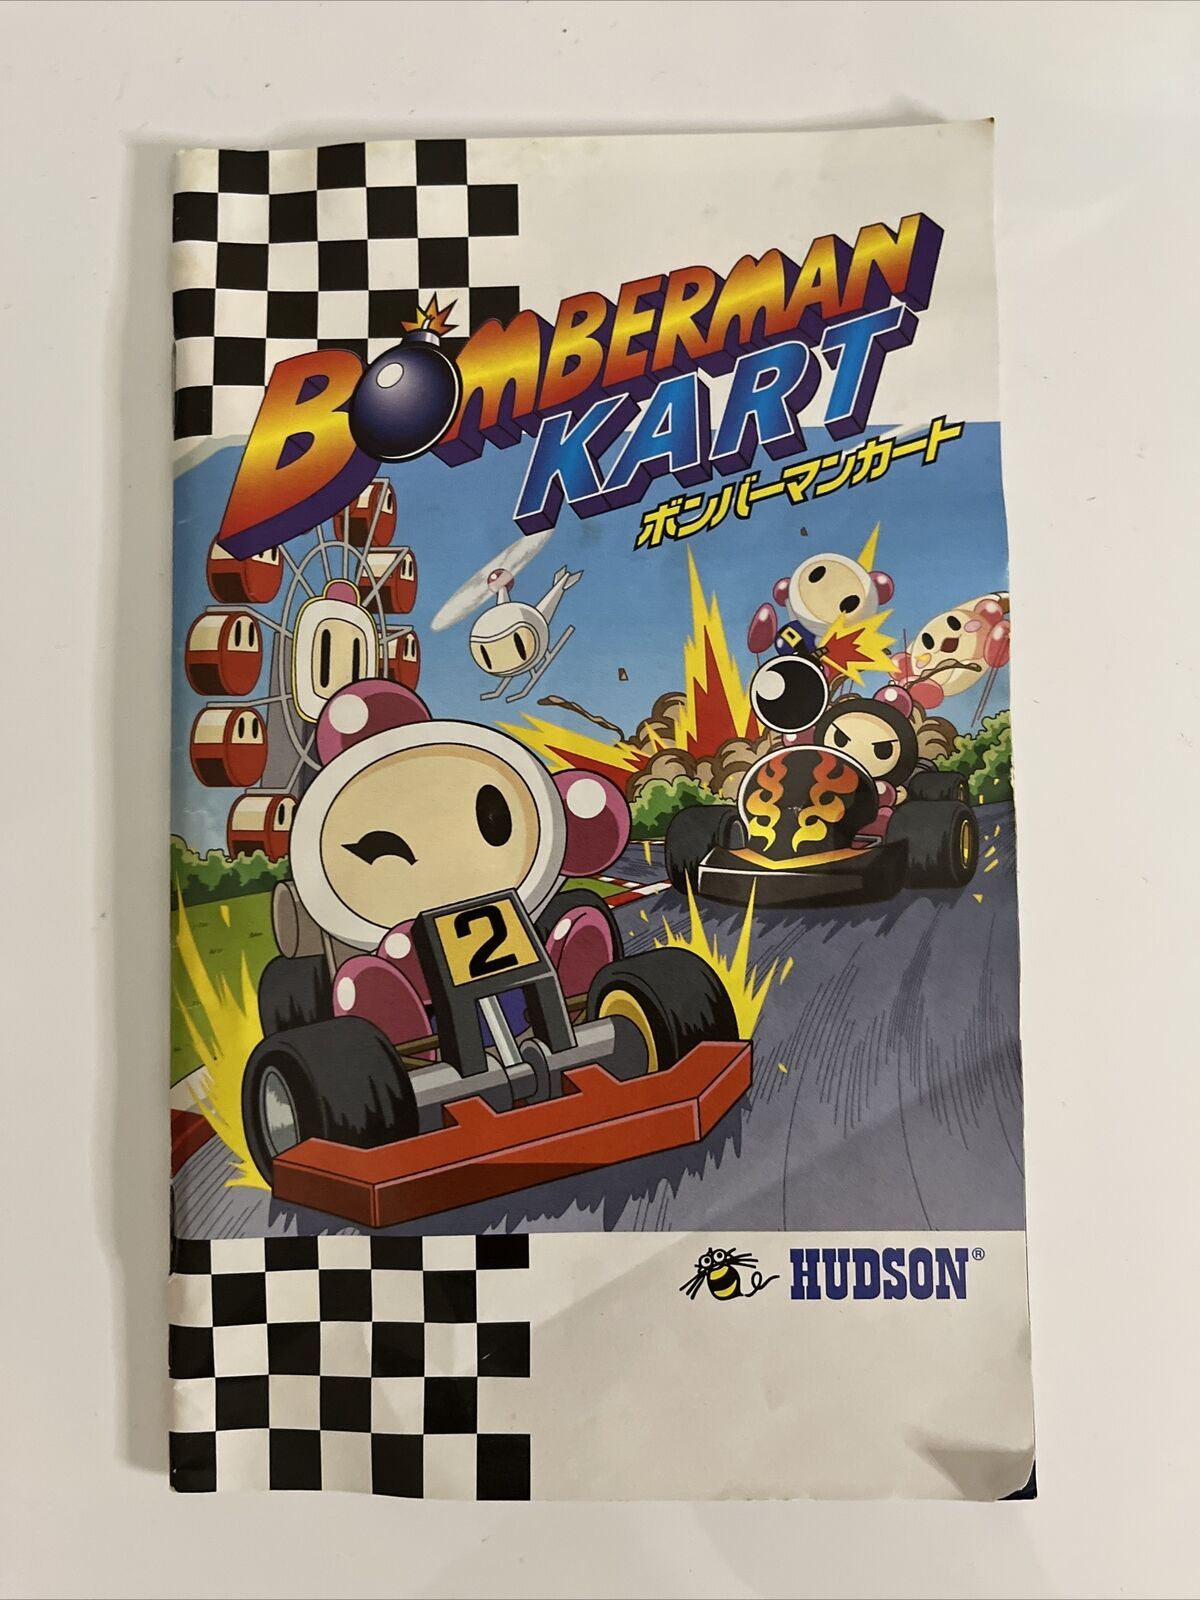 Bomberman Land 3 (PS2, JP) - Cover Art, Disc, and Manual : Free